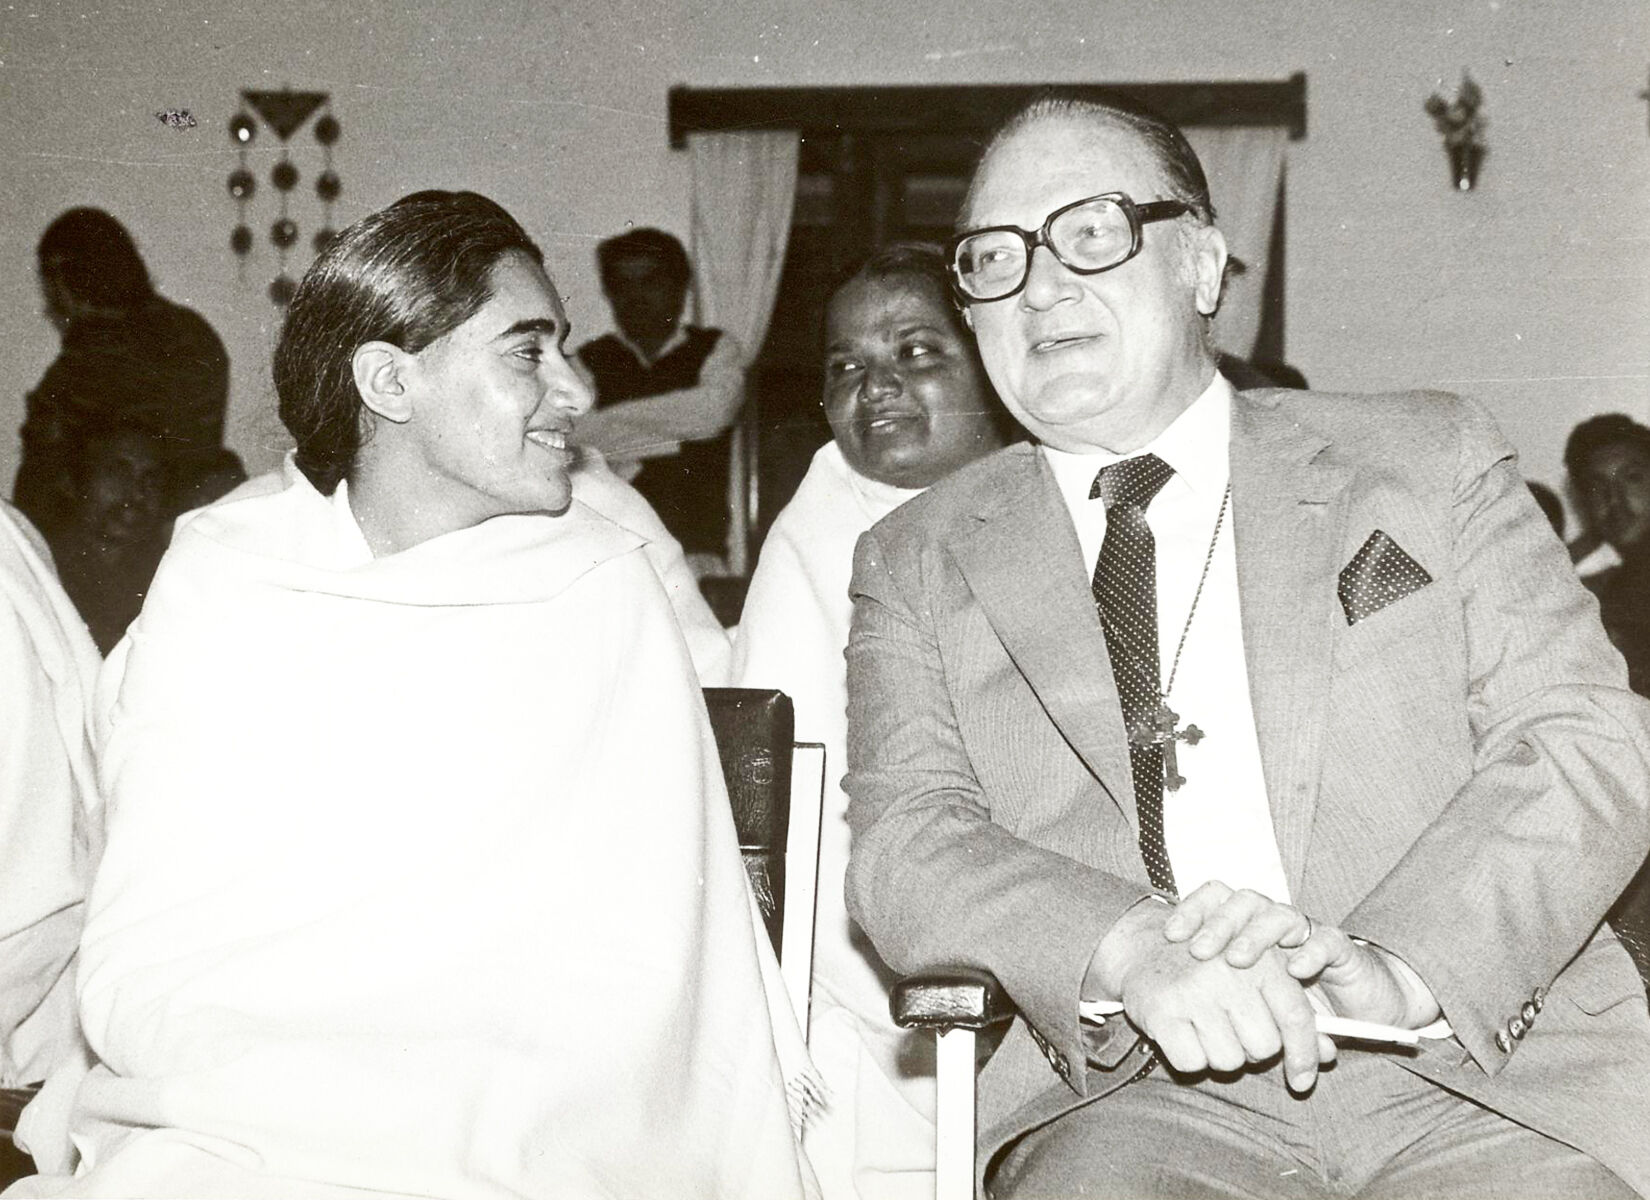 With Robert Muller, UN Assistant Secretary-General, Mt. Abu, India, 1983